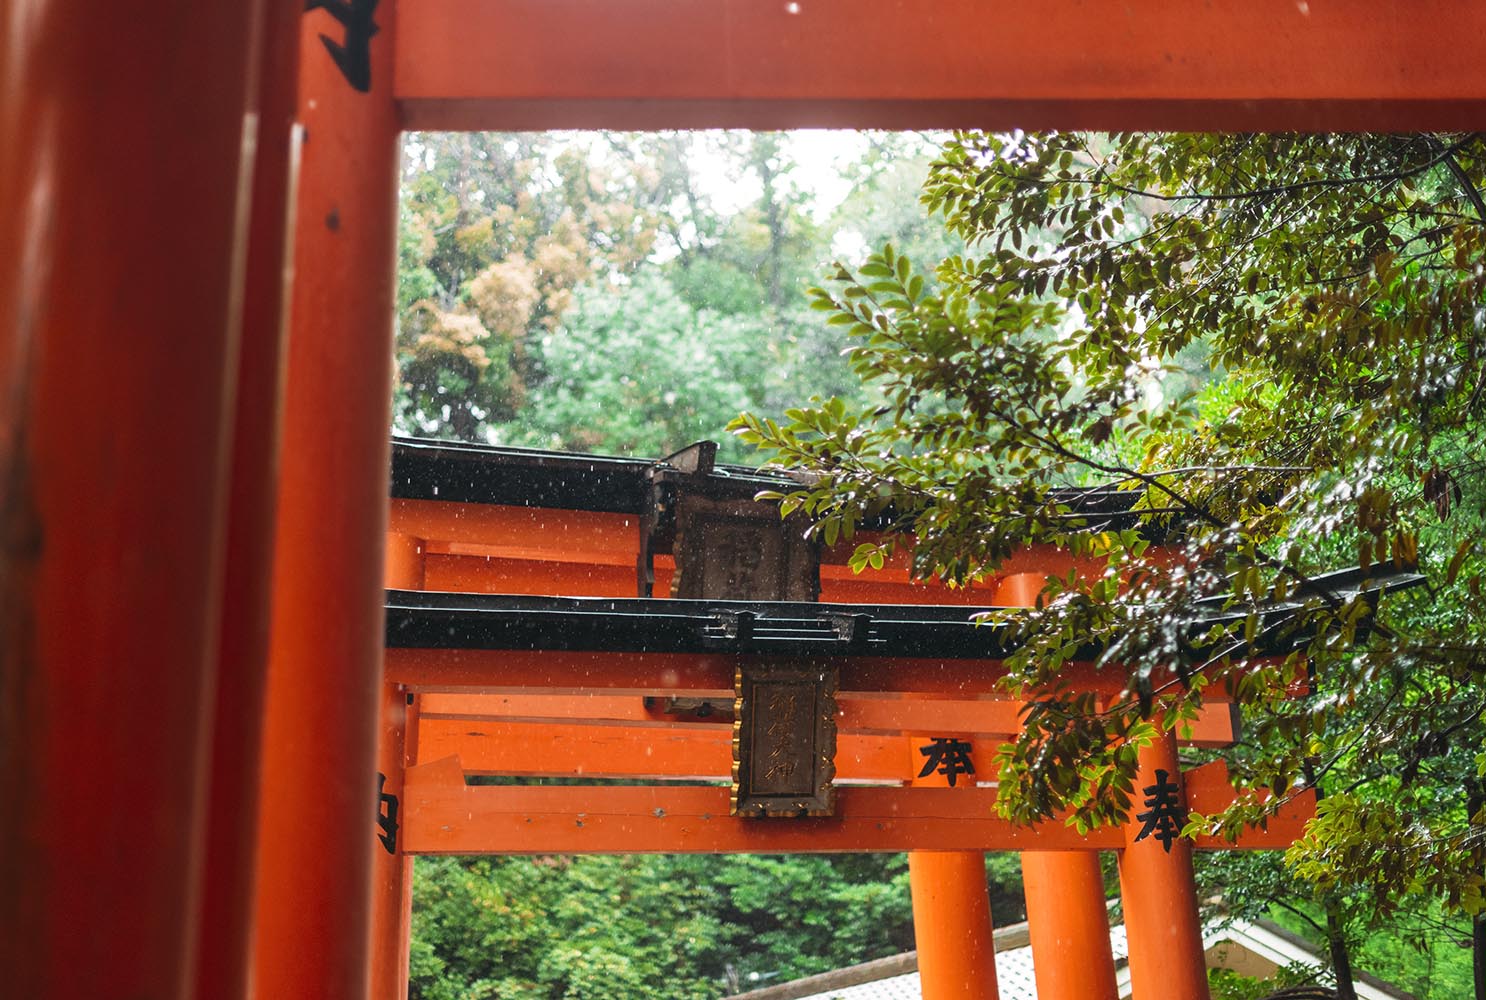 Torii gates of the Shinto sanctuary of Fushimi Inari Taisha, in